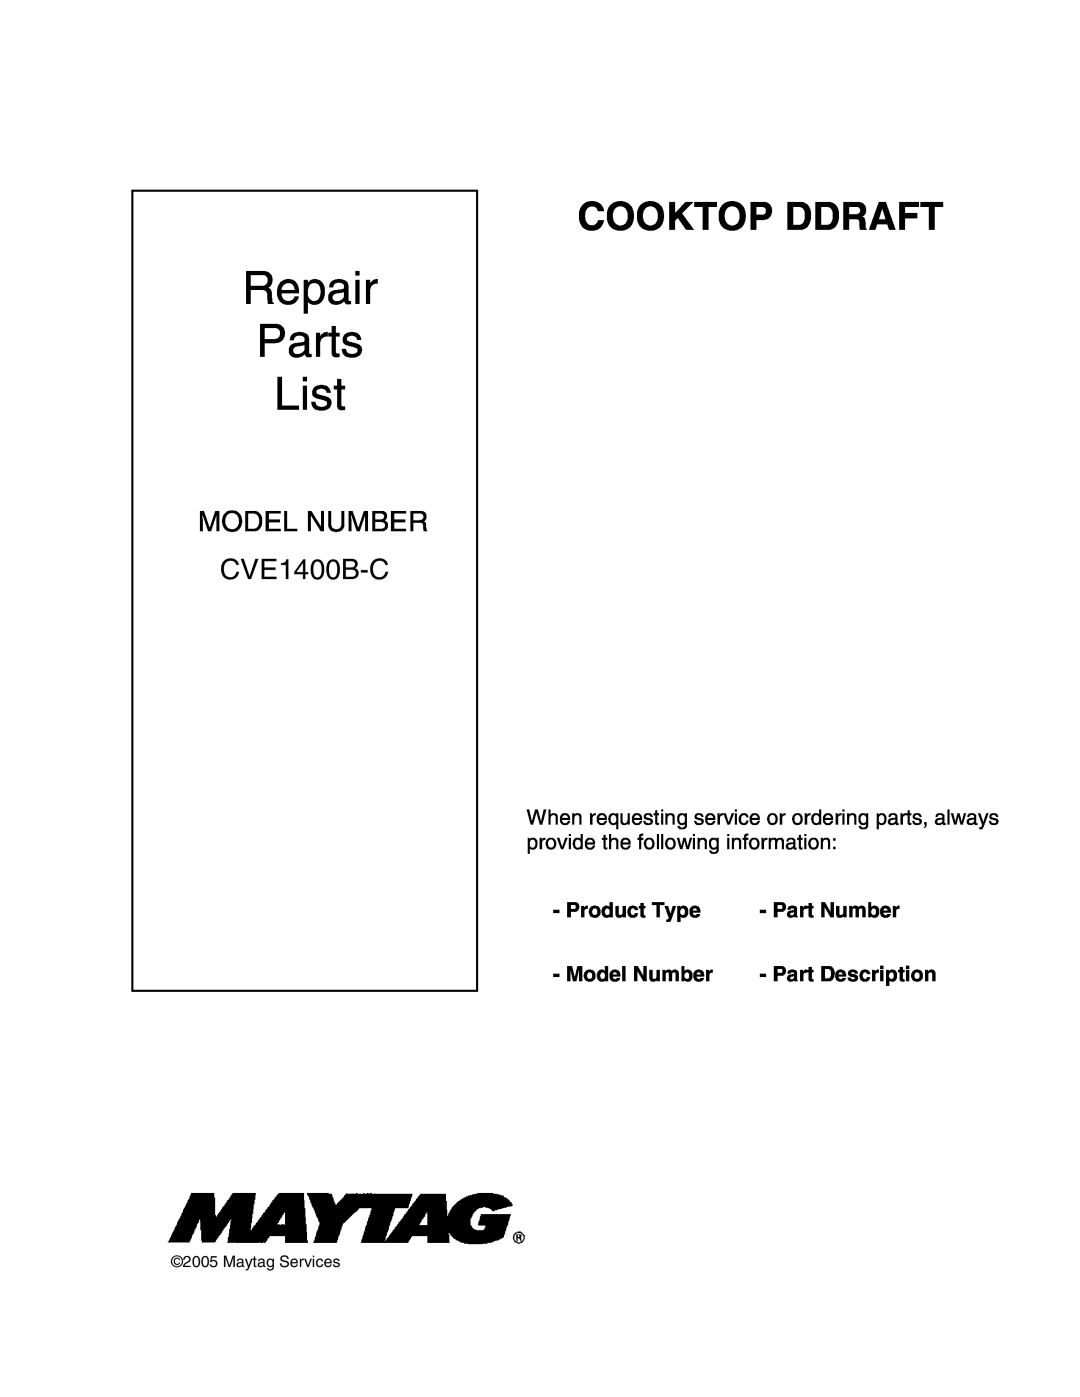 Whirlpool CVE1400B-C manual Product Type, Part Number, Model Number, Part Description, Repair Parts List, Cooktop Ddraft 